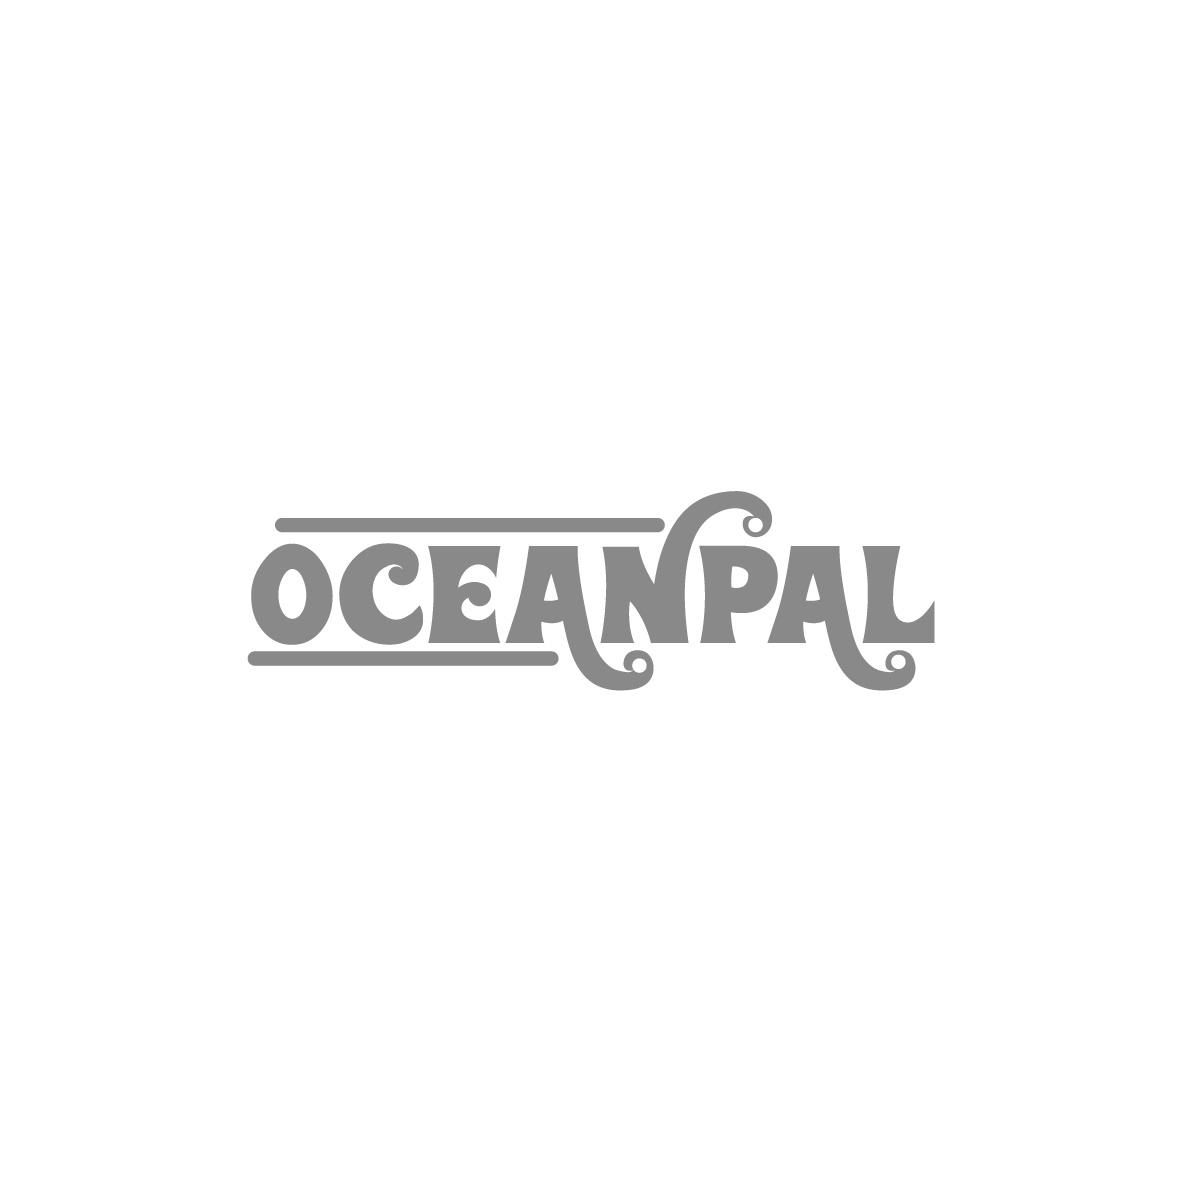 OCEANPAL